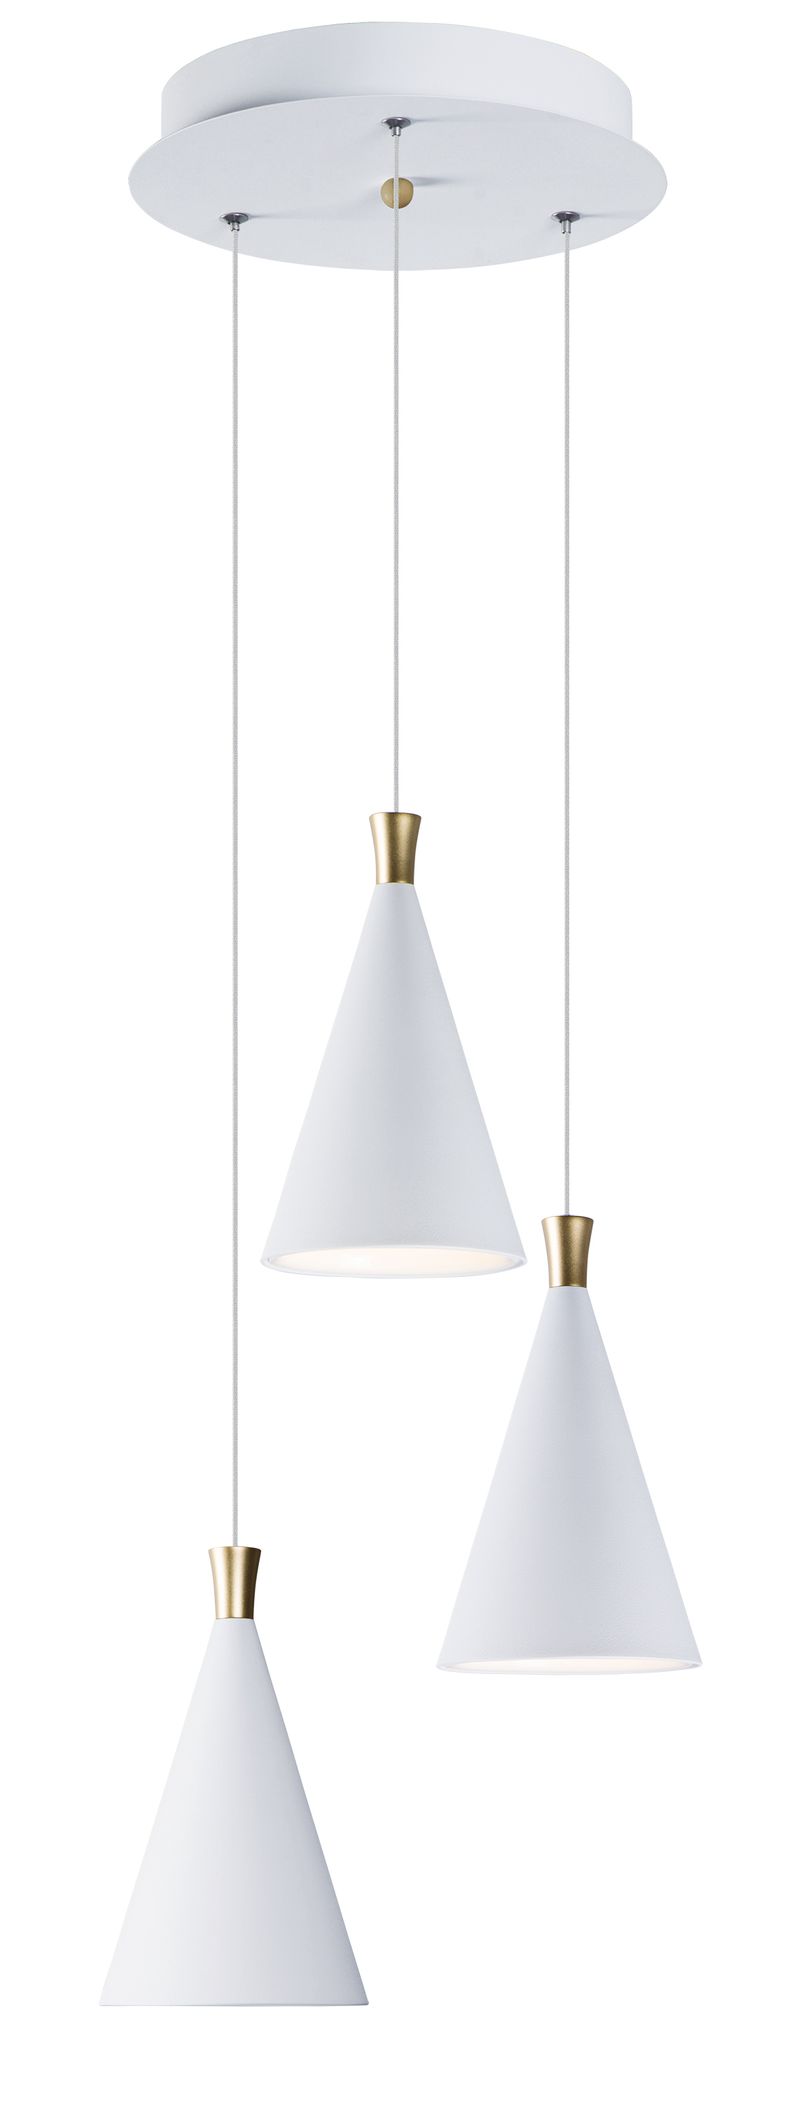 Norsk 12.5' 3 Light Multi-Light Pendant in White and Metallic Gold